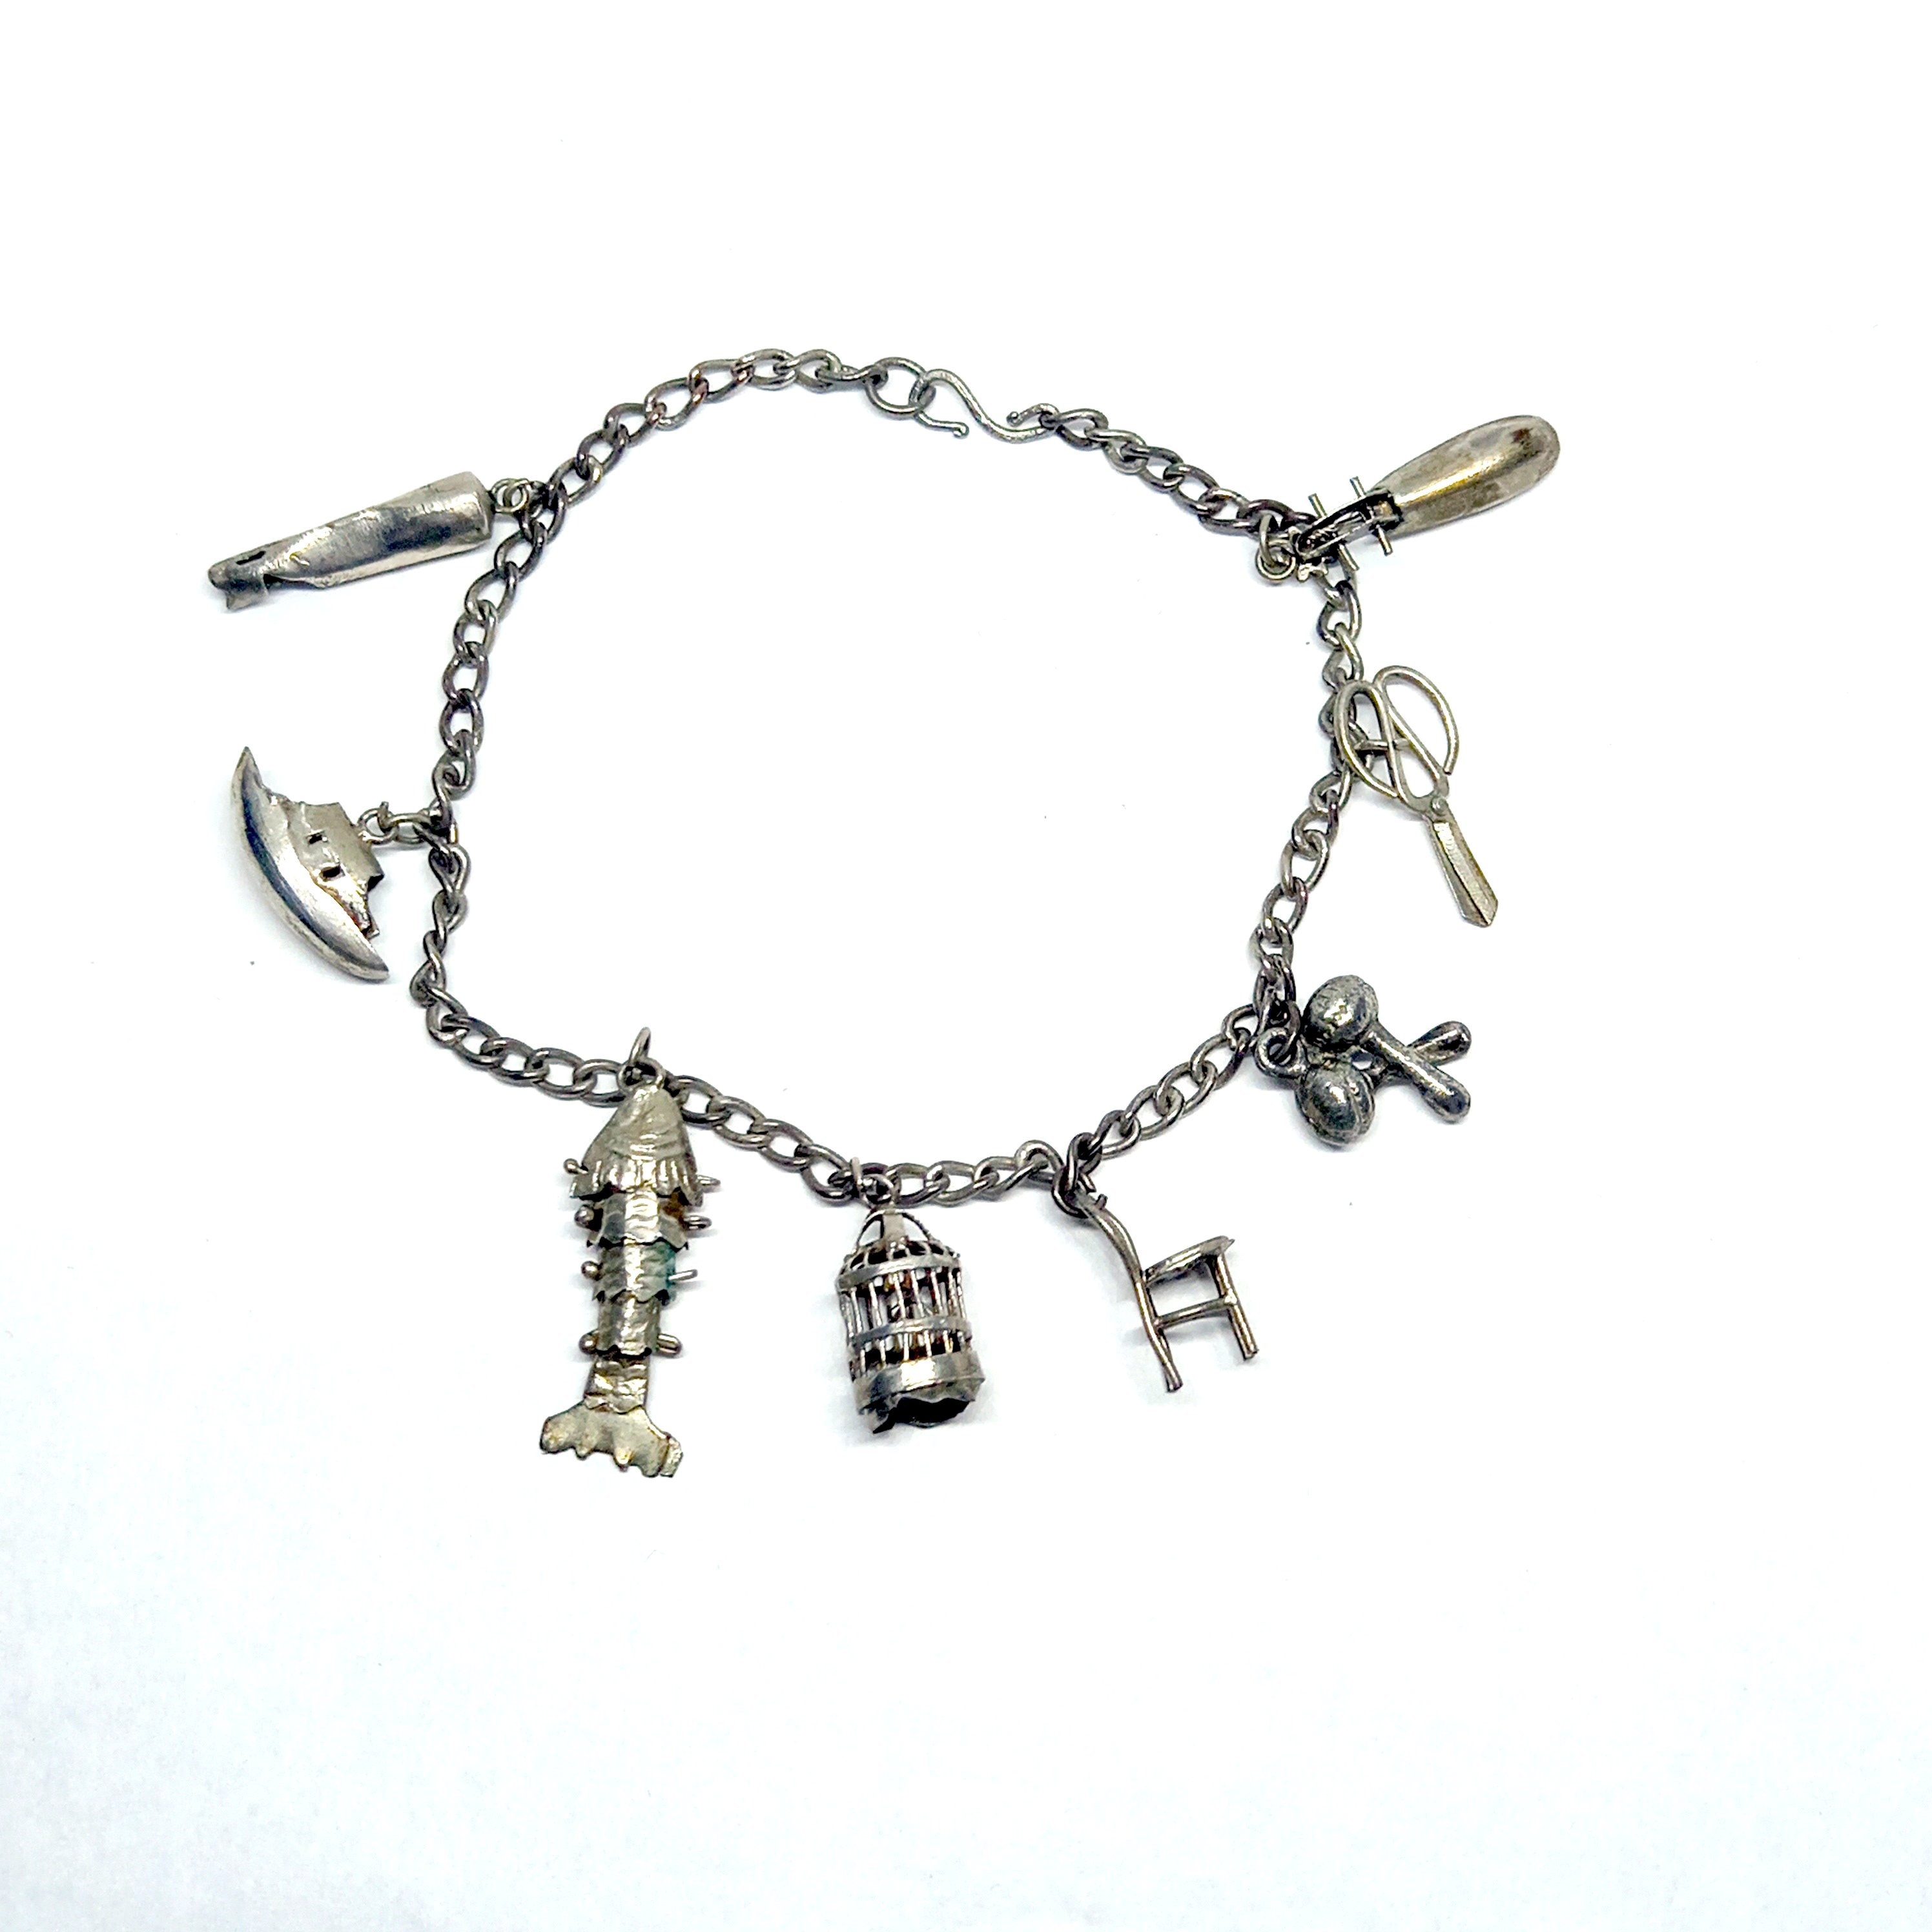 5pc, Silver Necklace Clasps, Hook Clasps, Bracelet Findings